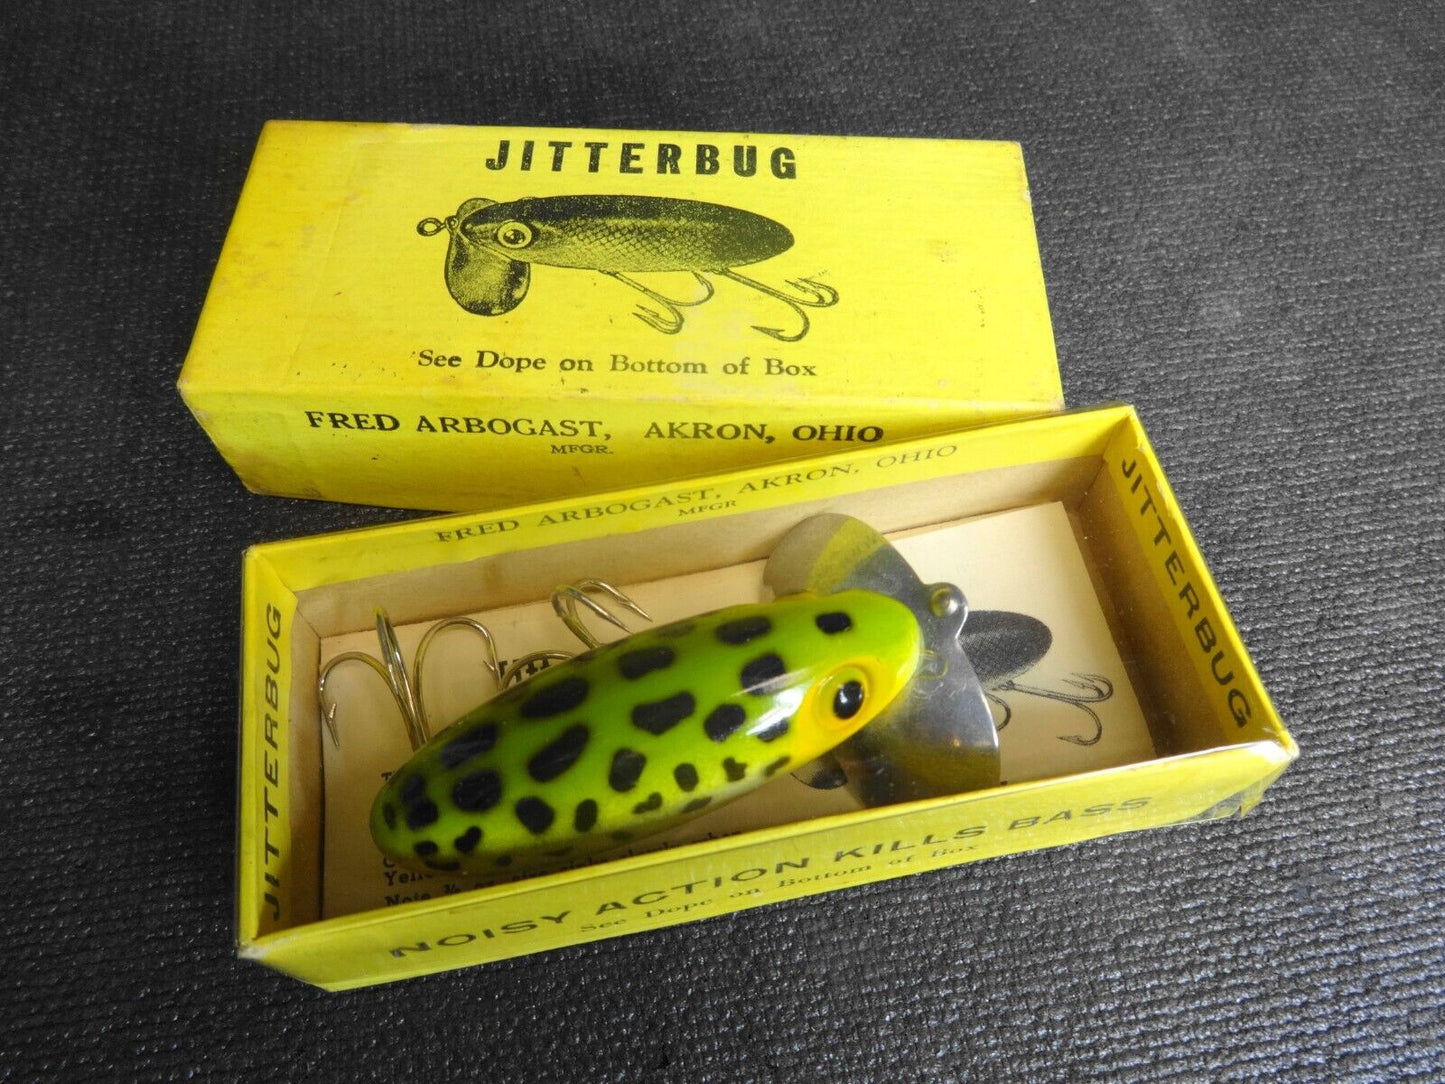 Arbogast Jitterbug Lure Yellow w/ Metal Lip. Box & Paper. Fishing Lure.